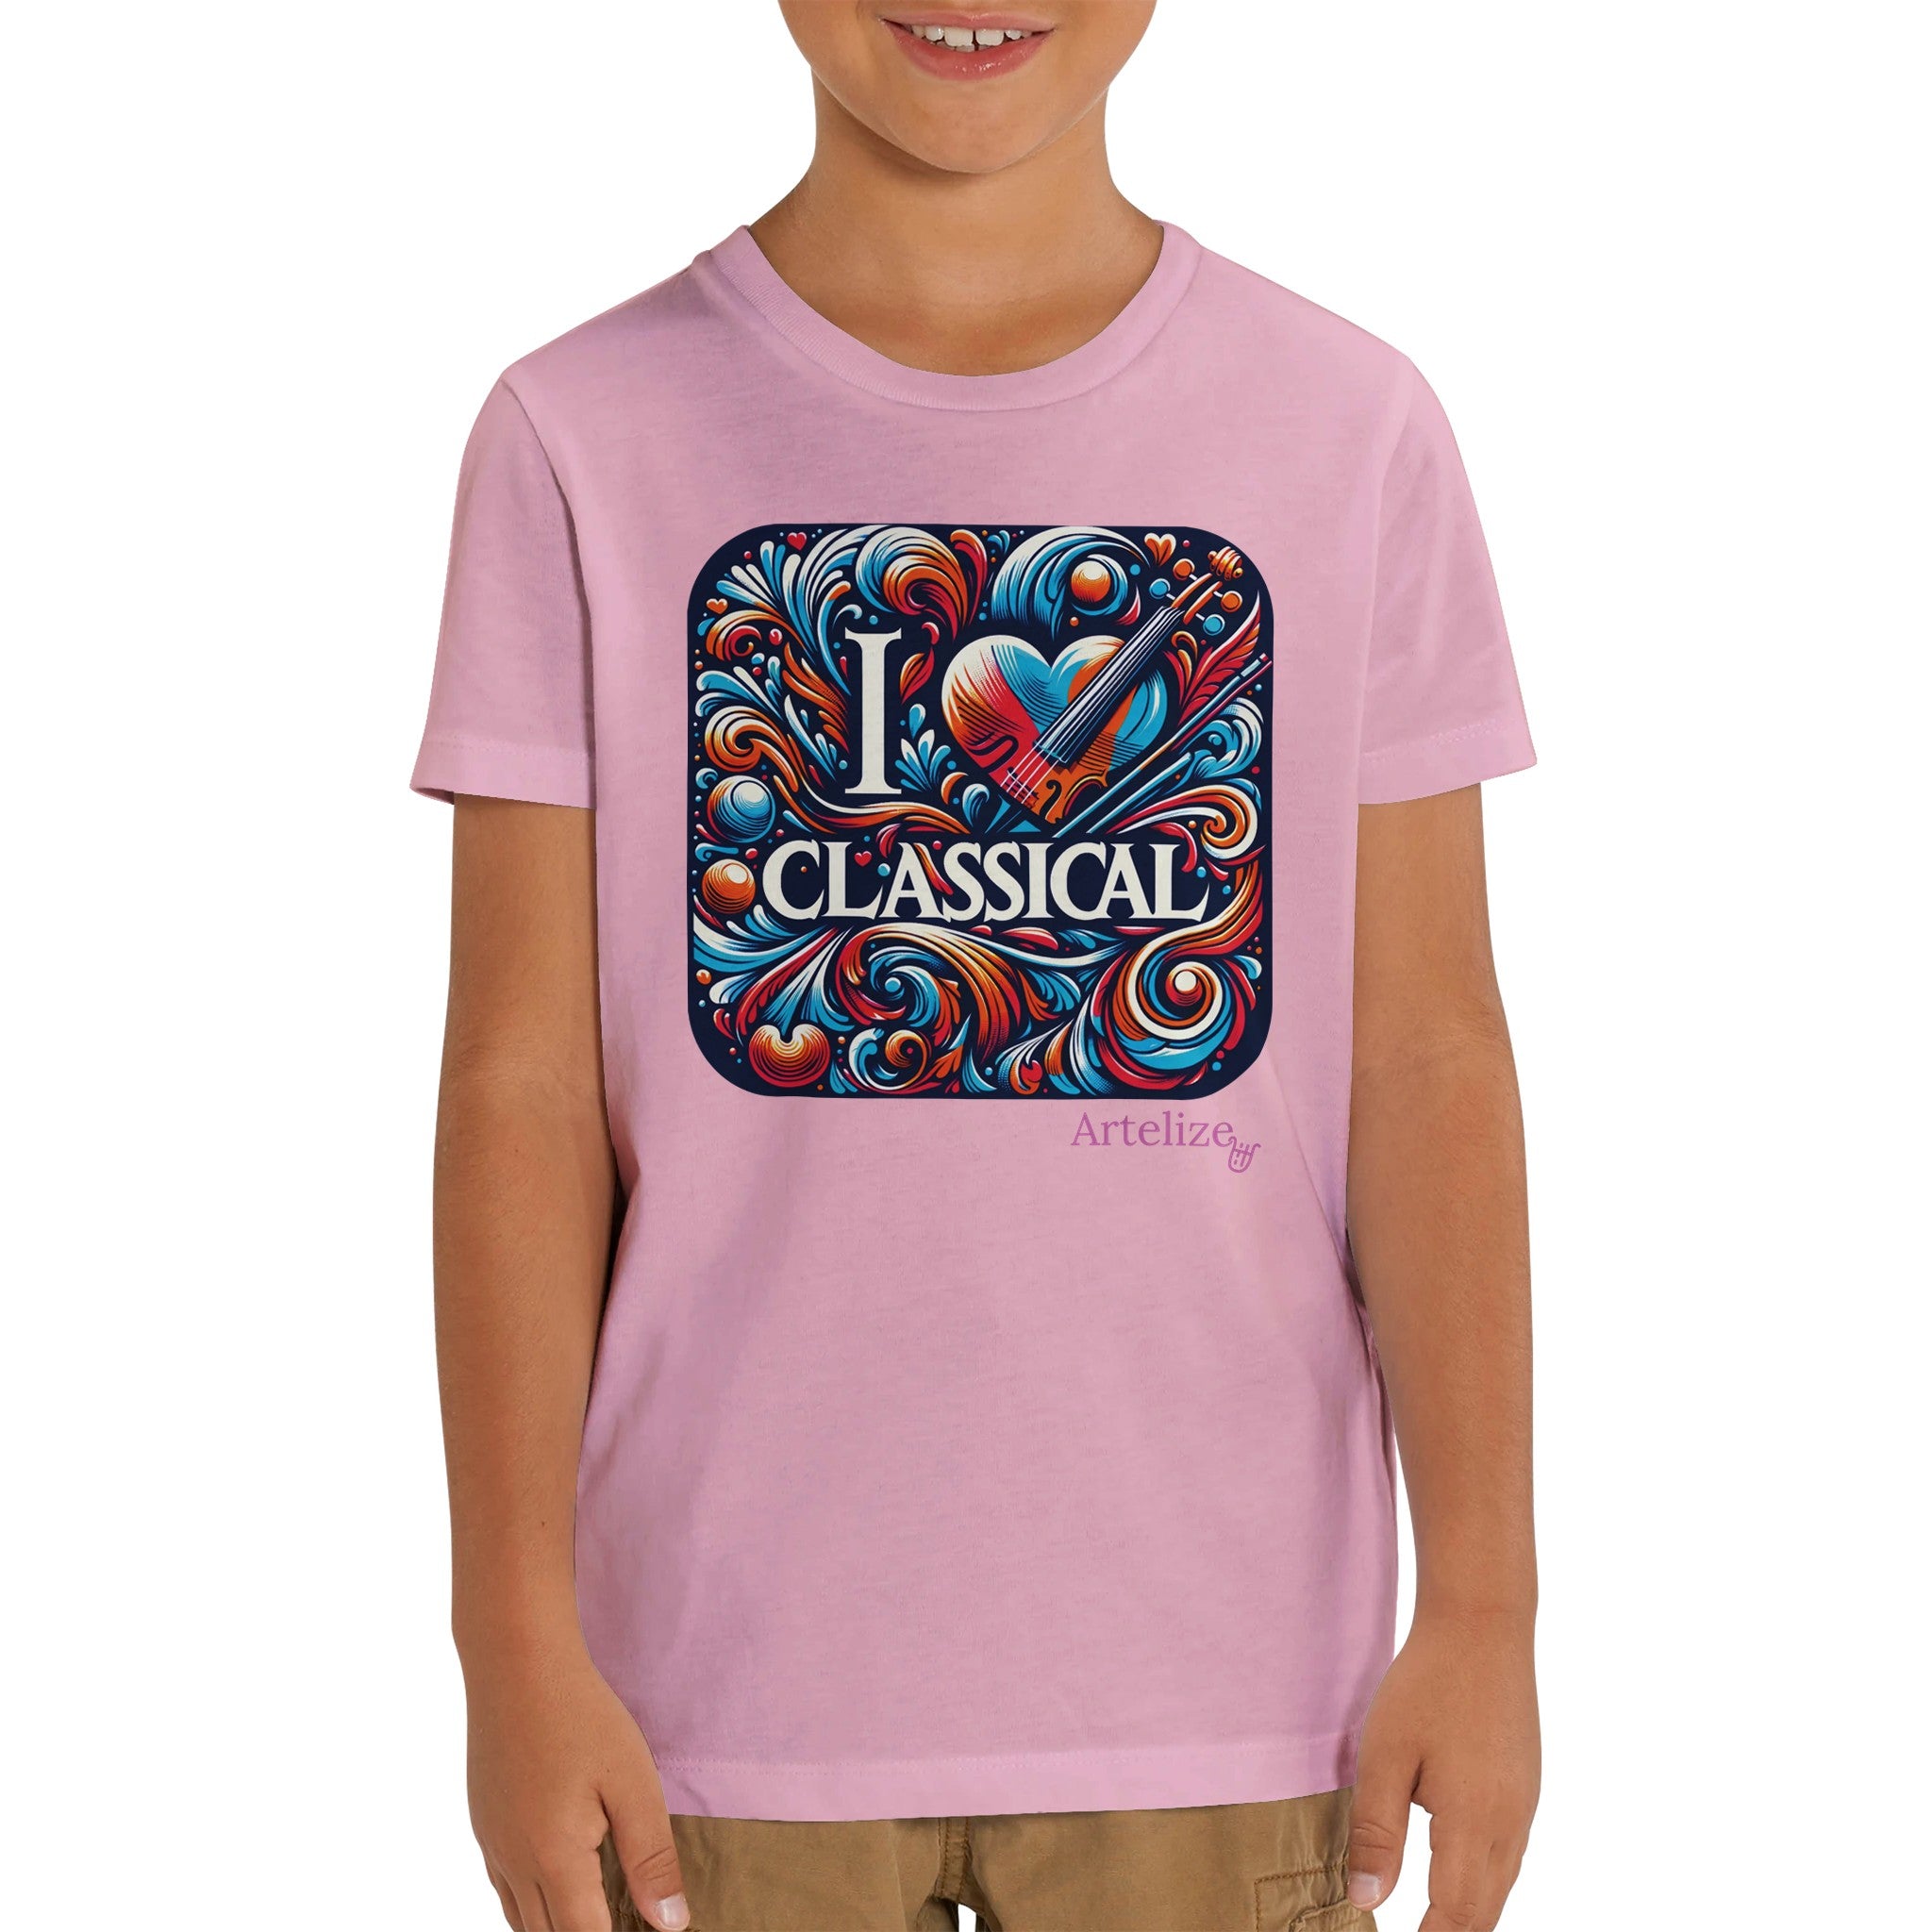 "I LOVE CLASSICAL" Organic Kids Crewneck T-shirt